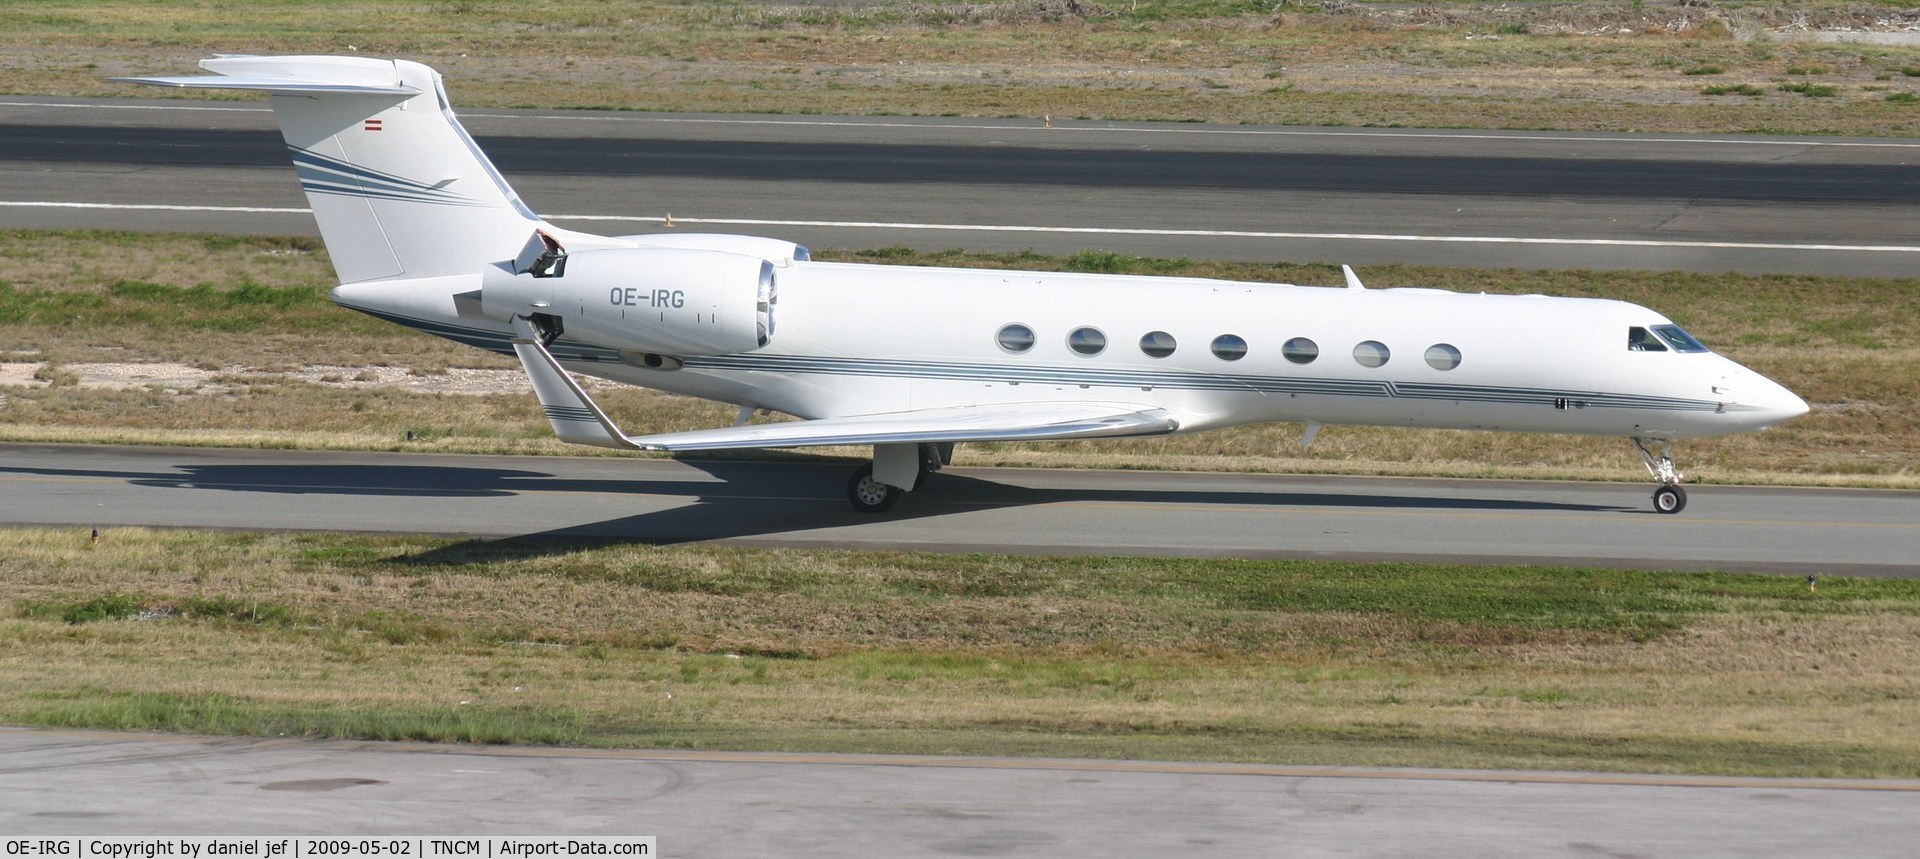 OE-IRG, 2006 Gulfstream Aerospace V-SP G550 C/N 5139, taxing runway 10